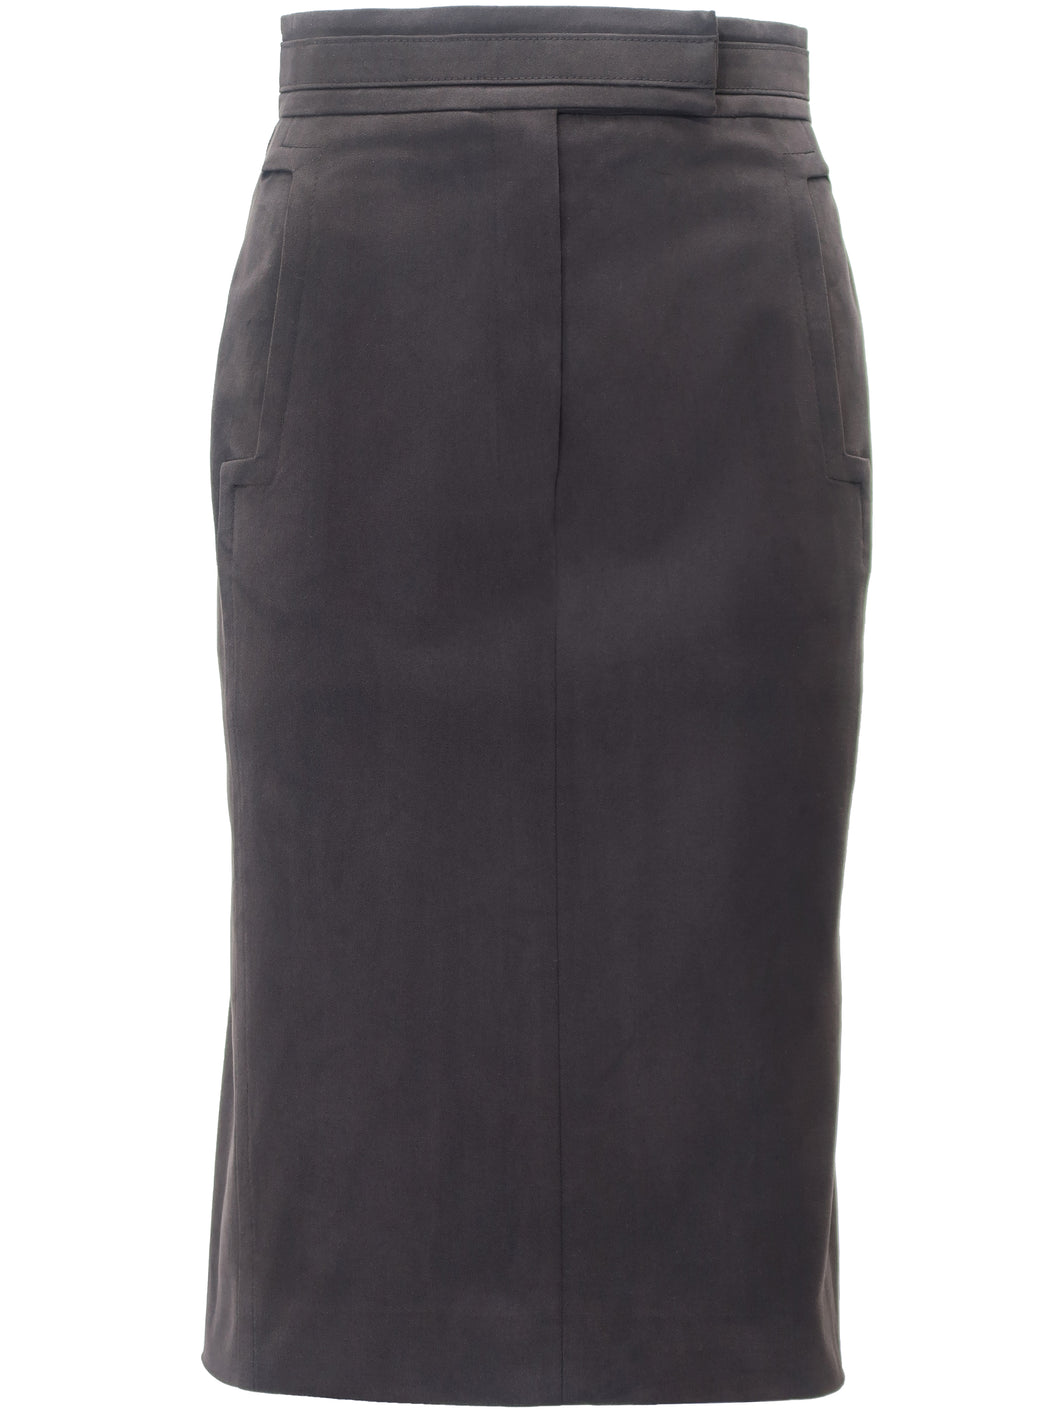 TOM FORD for YSL FW03 Higher Waist Skirt with Belt Detailing (brown) FR38